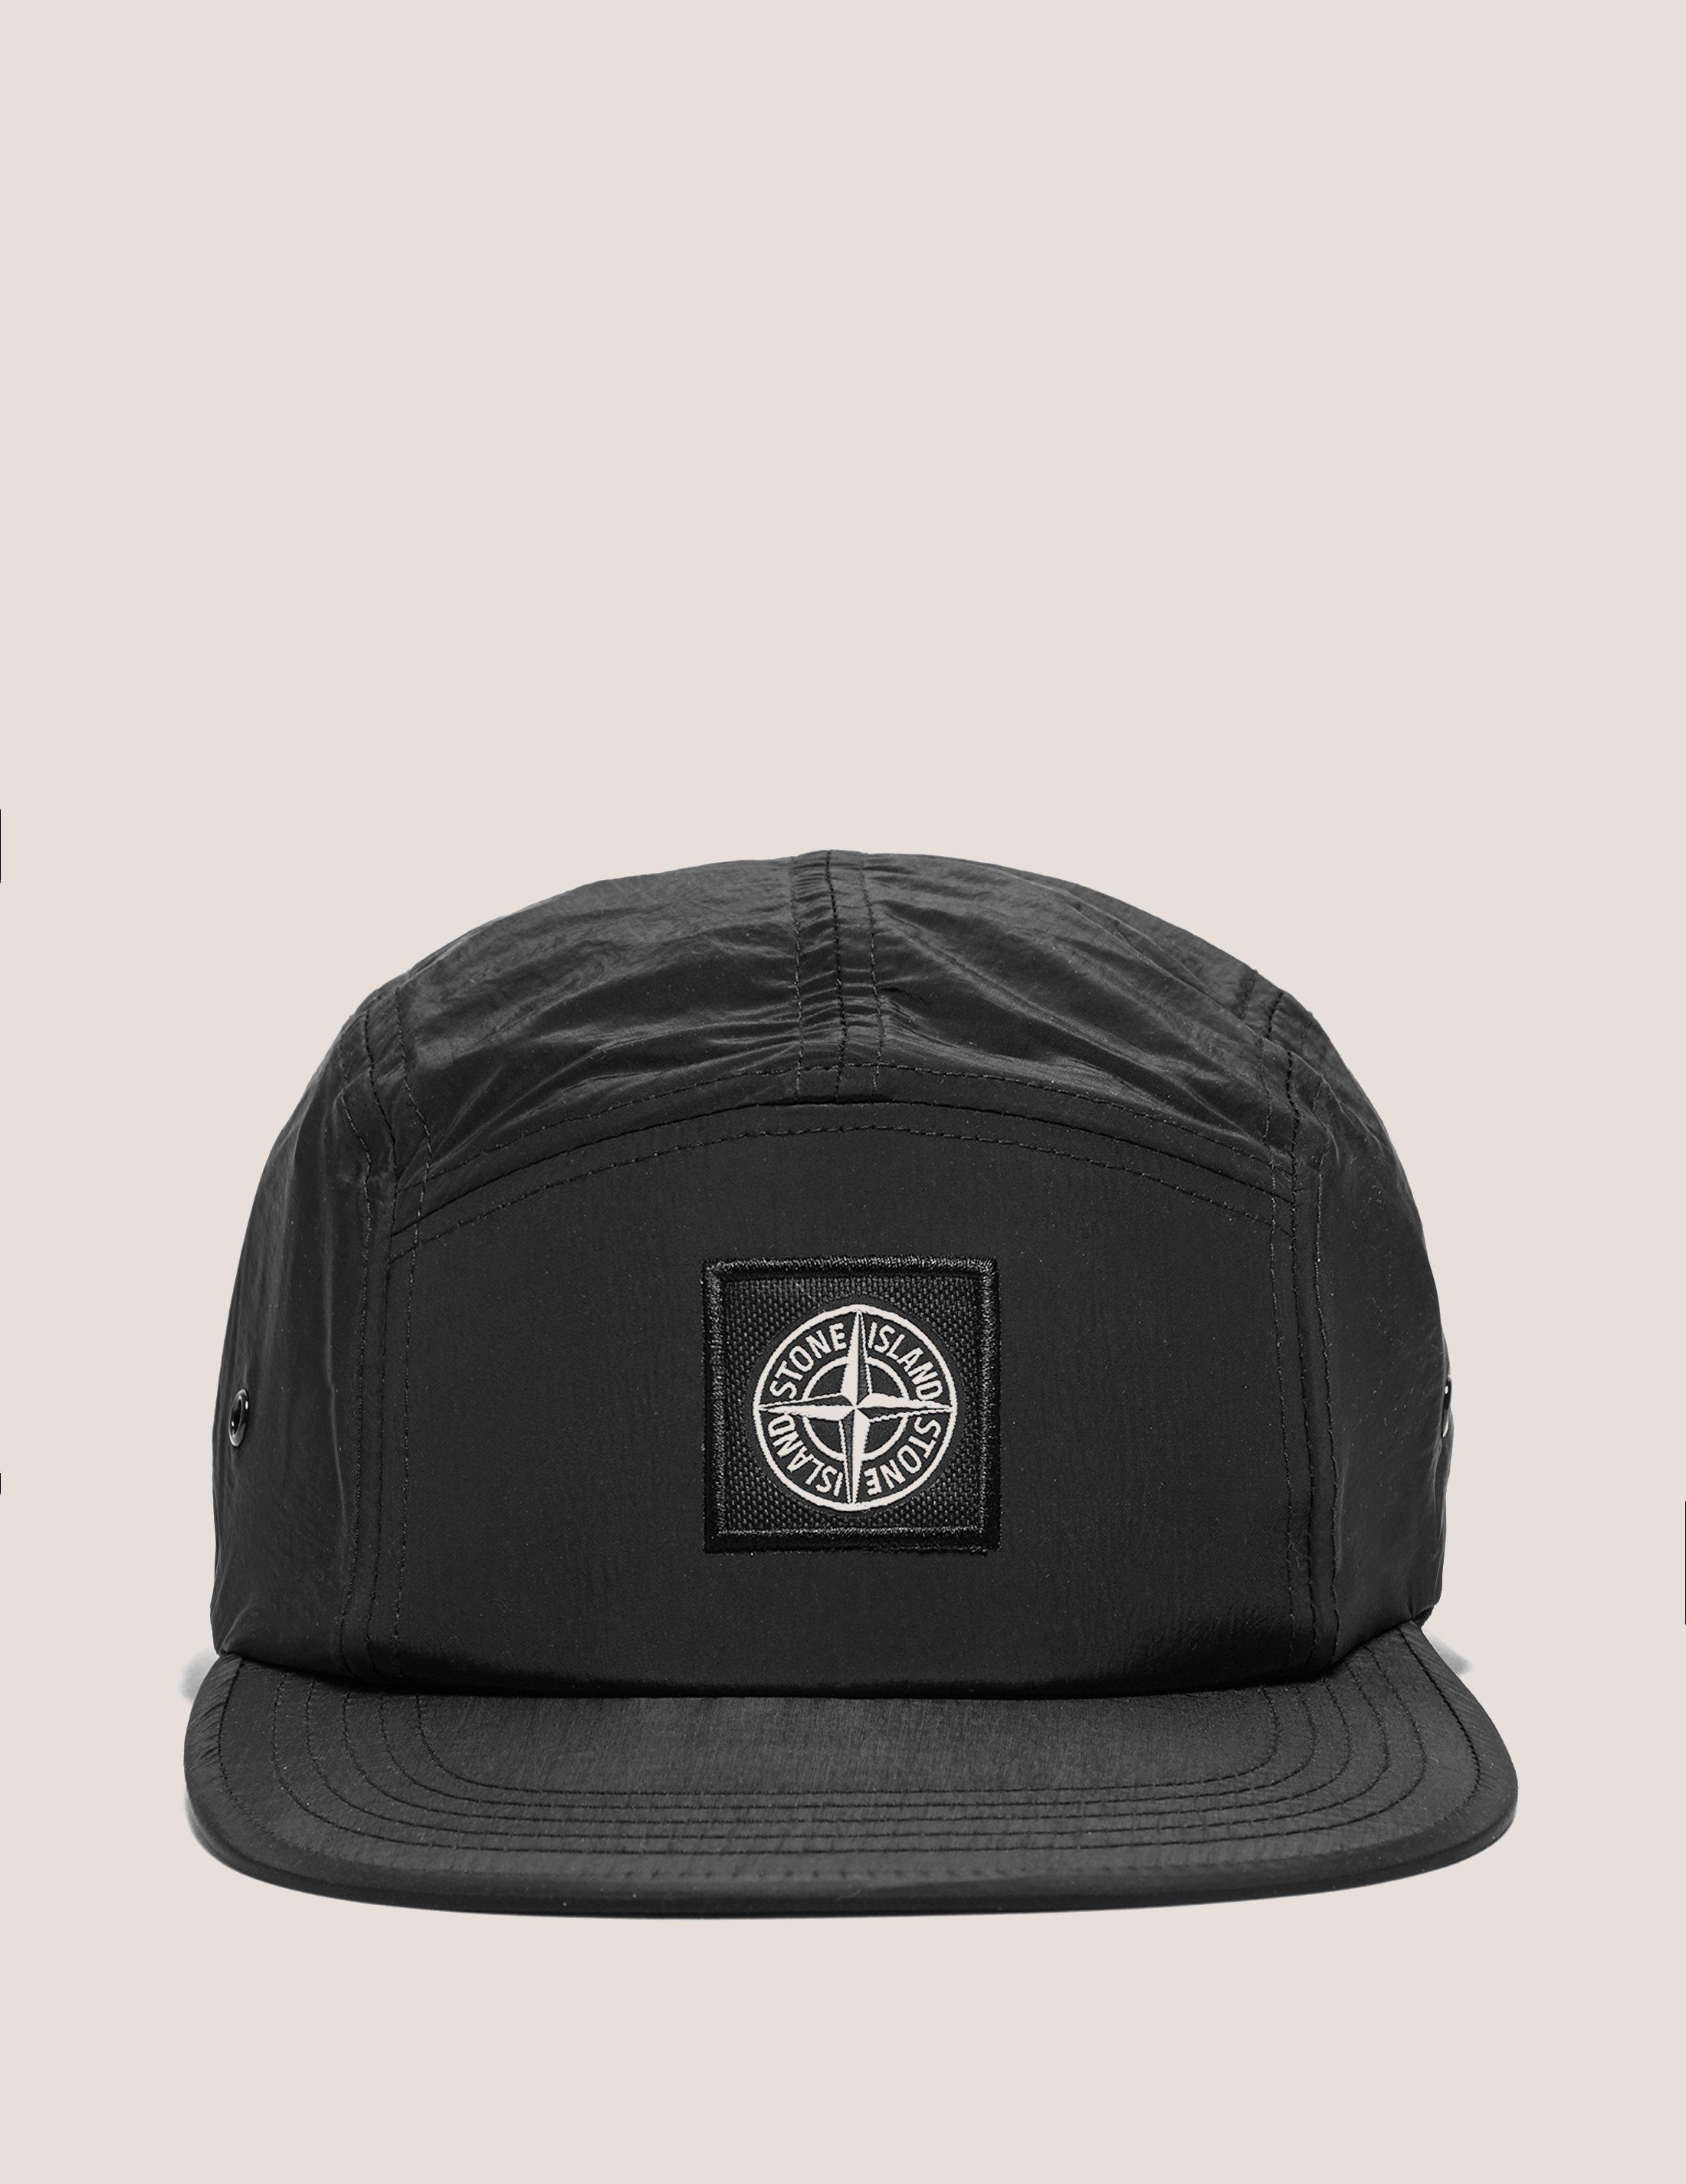 Lyst - Stone Island Nylon Metal Hat in Black for Men